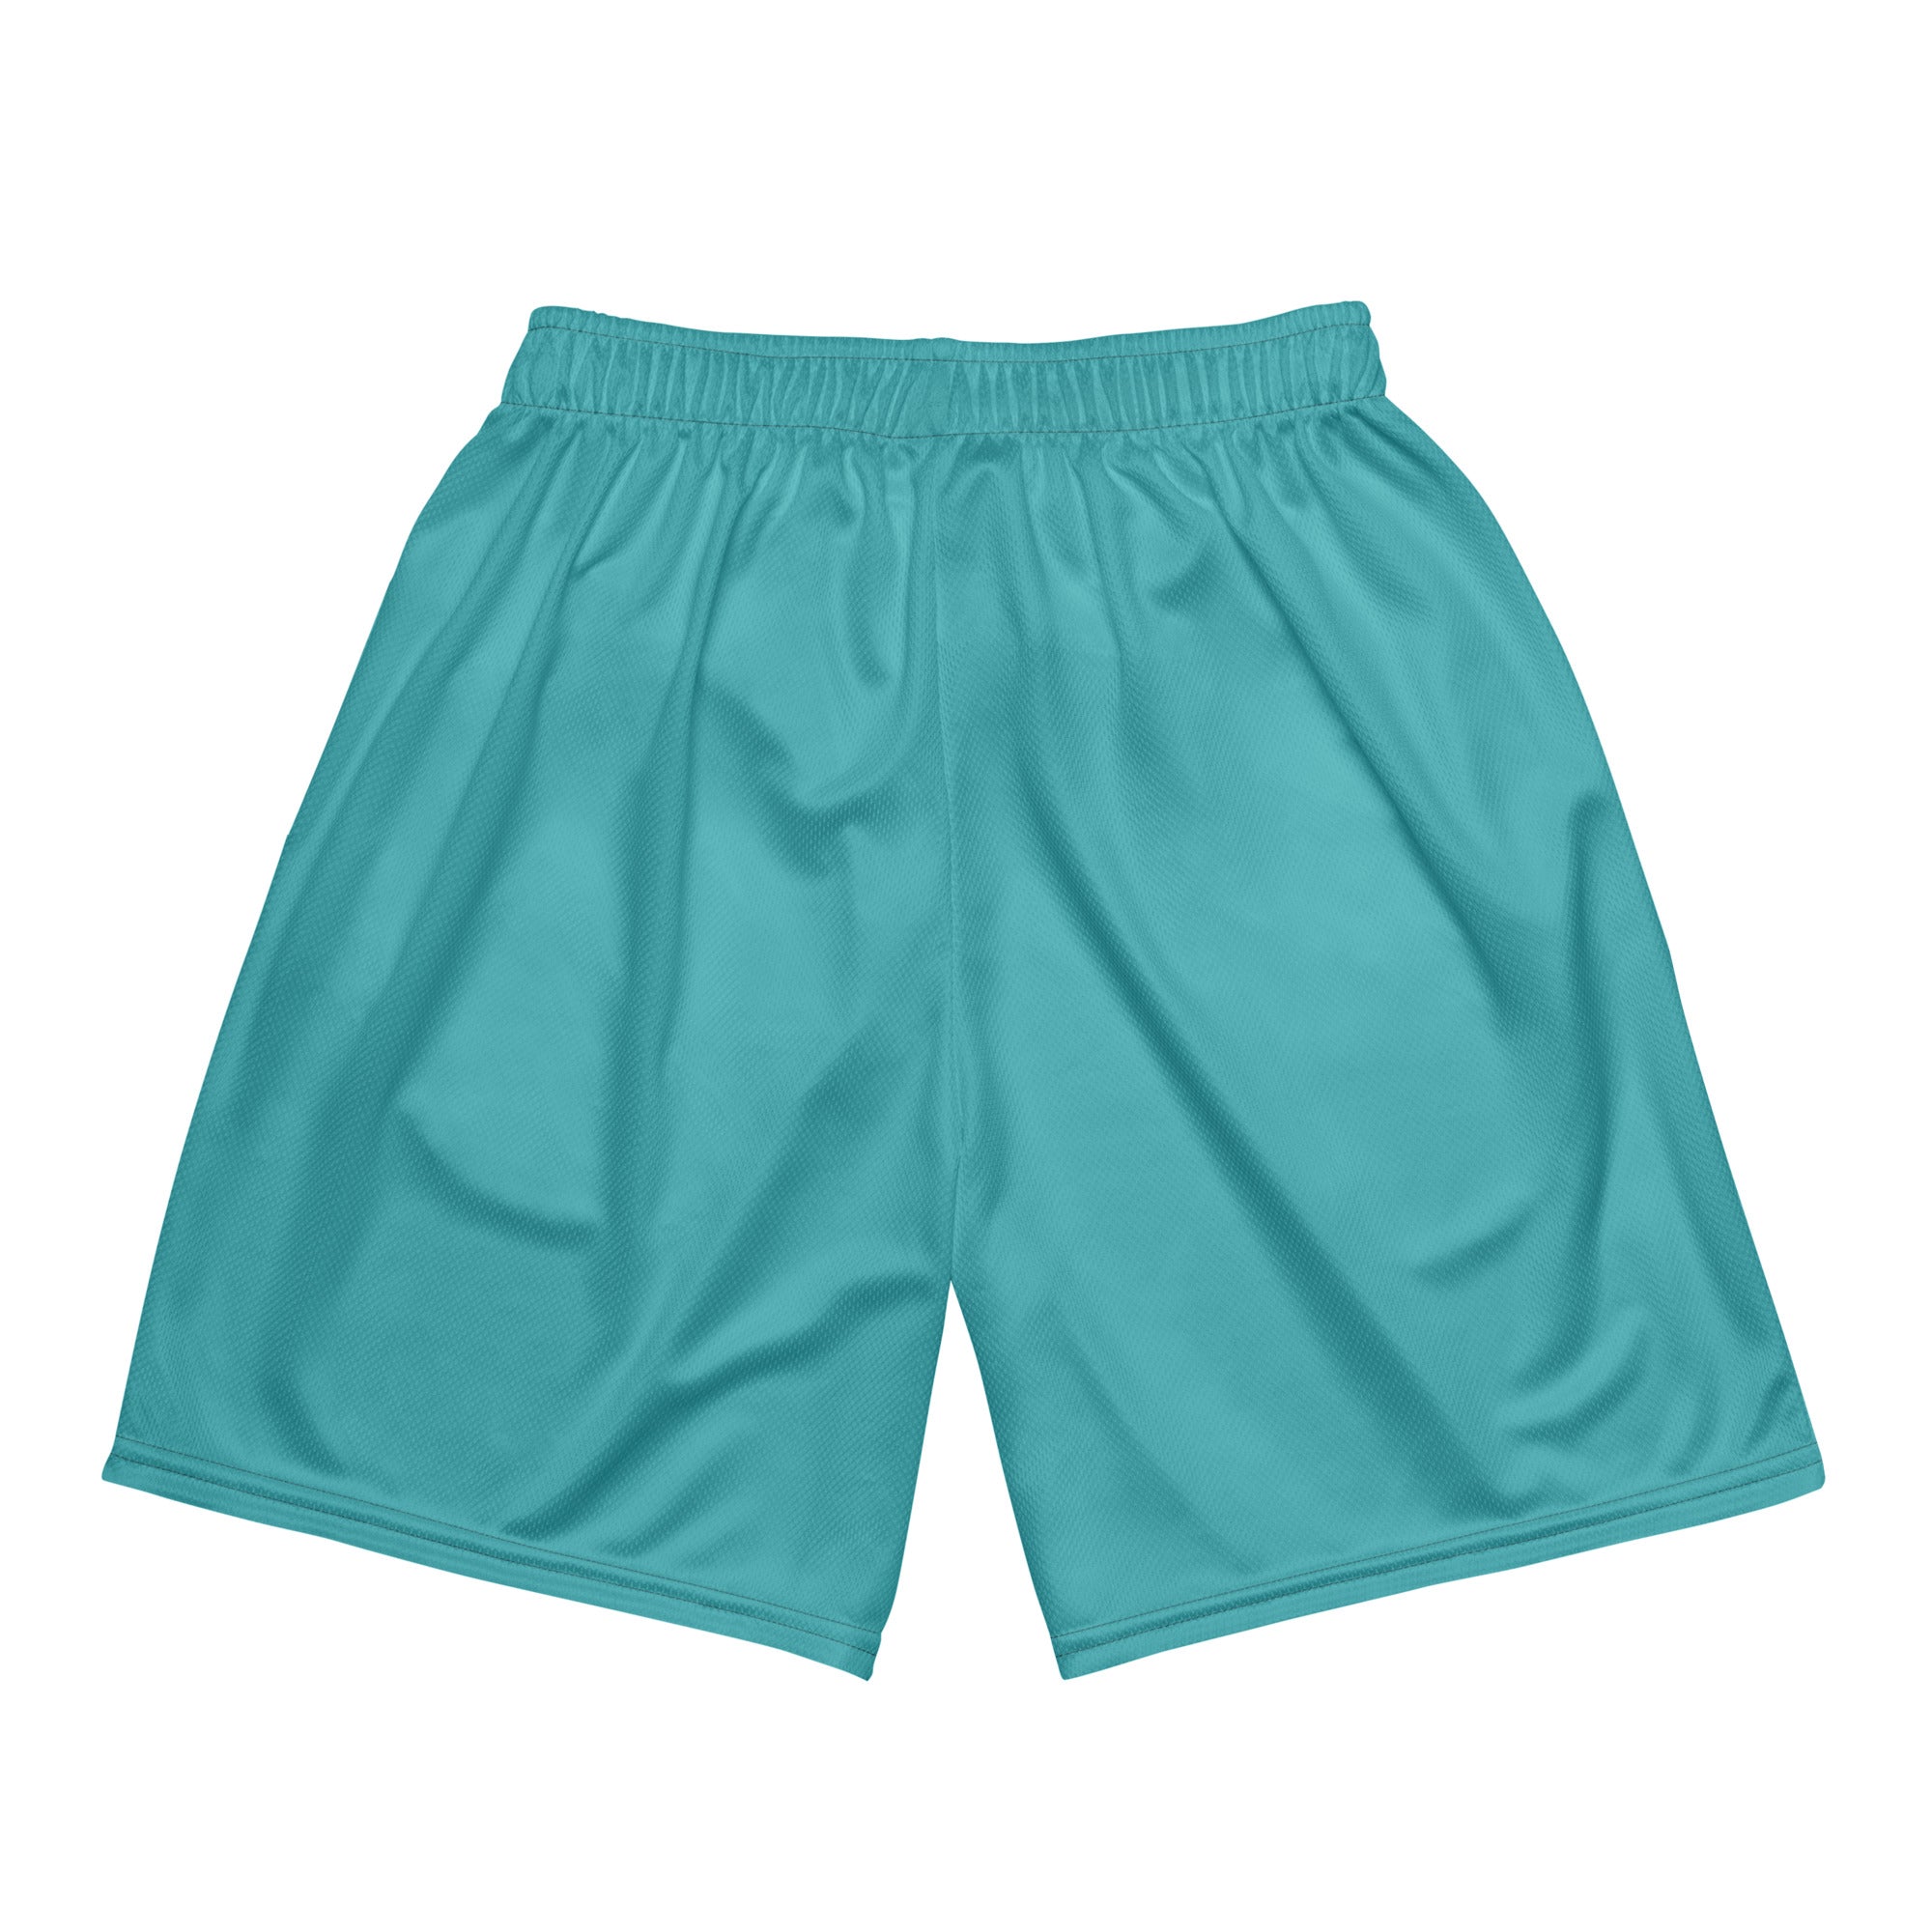 Women’s “Viking” mesh shorts